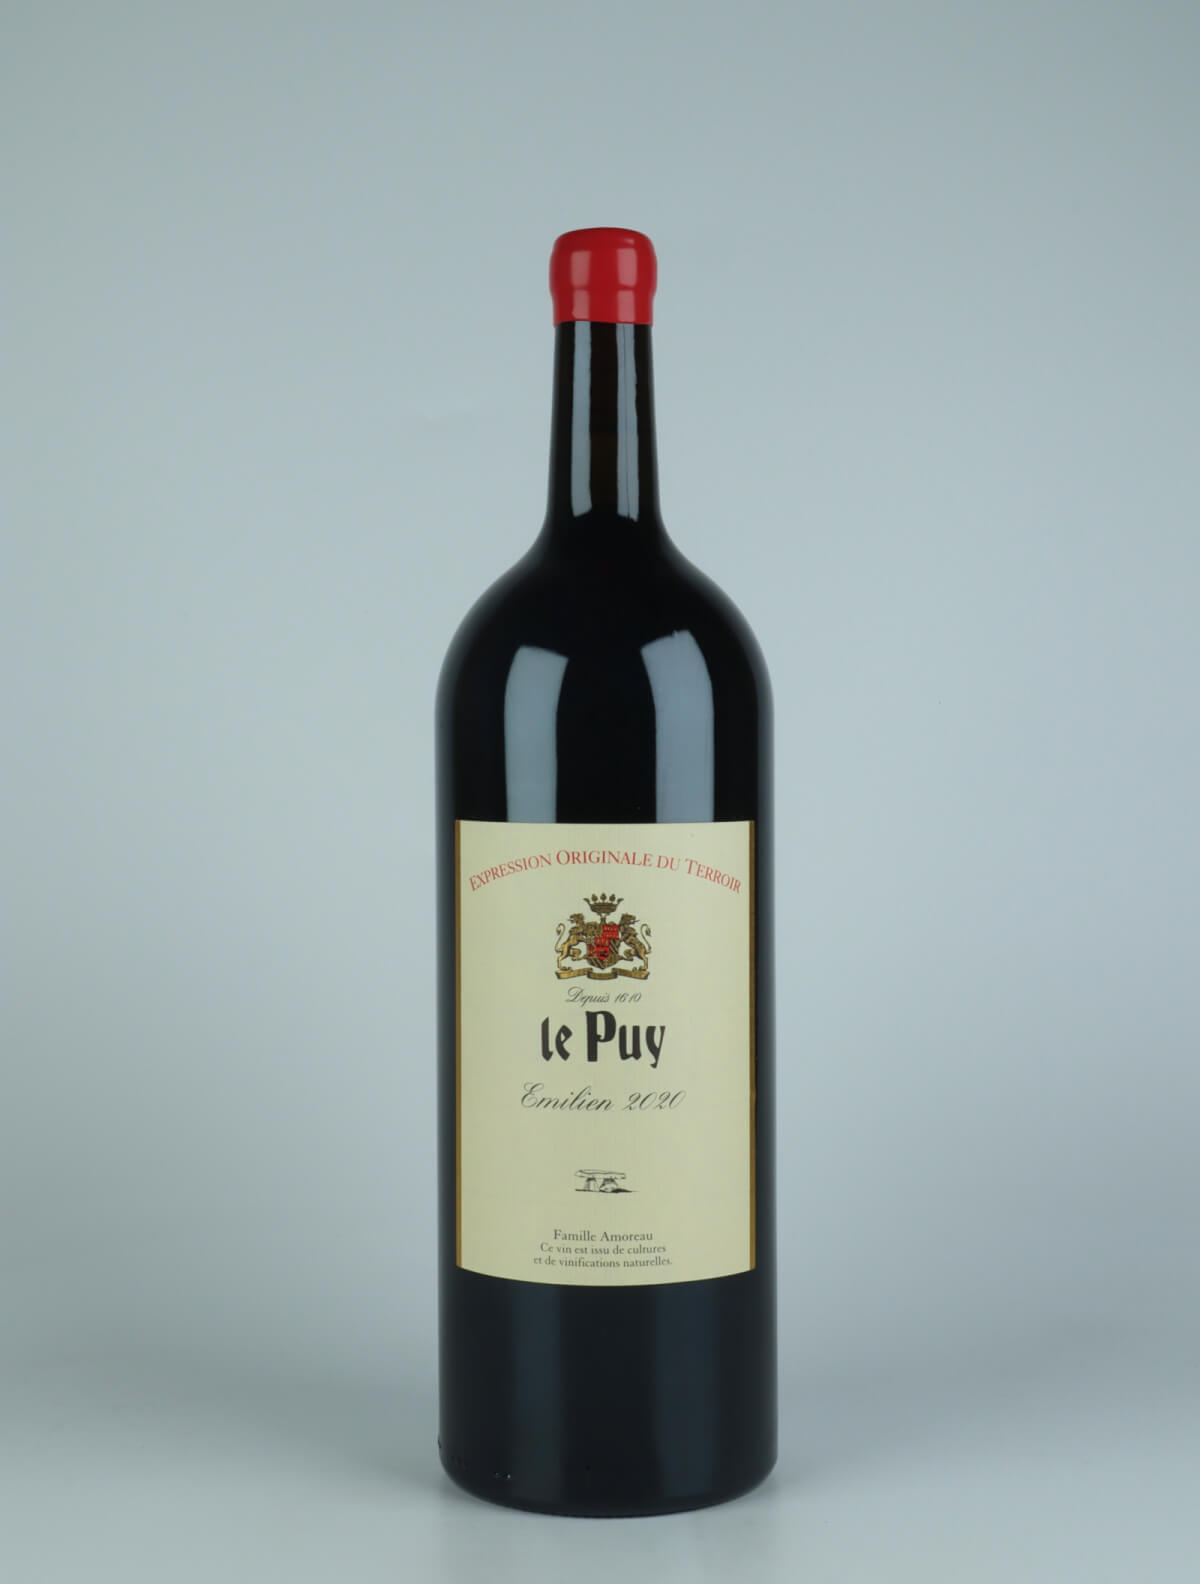 A bottle 2020 Emilien Red wine from Château le Puy, Bordeaux in France